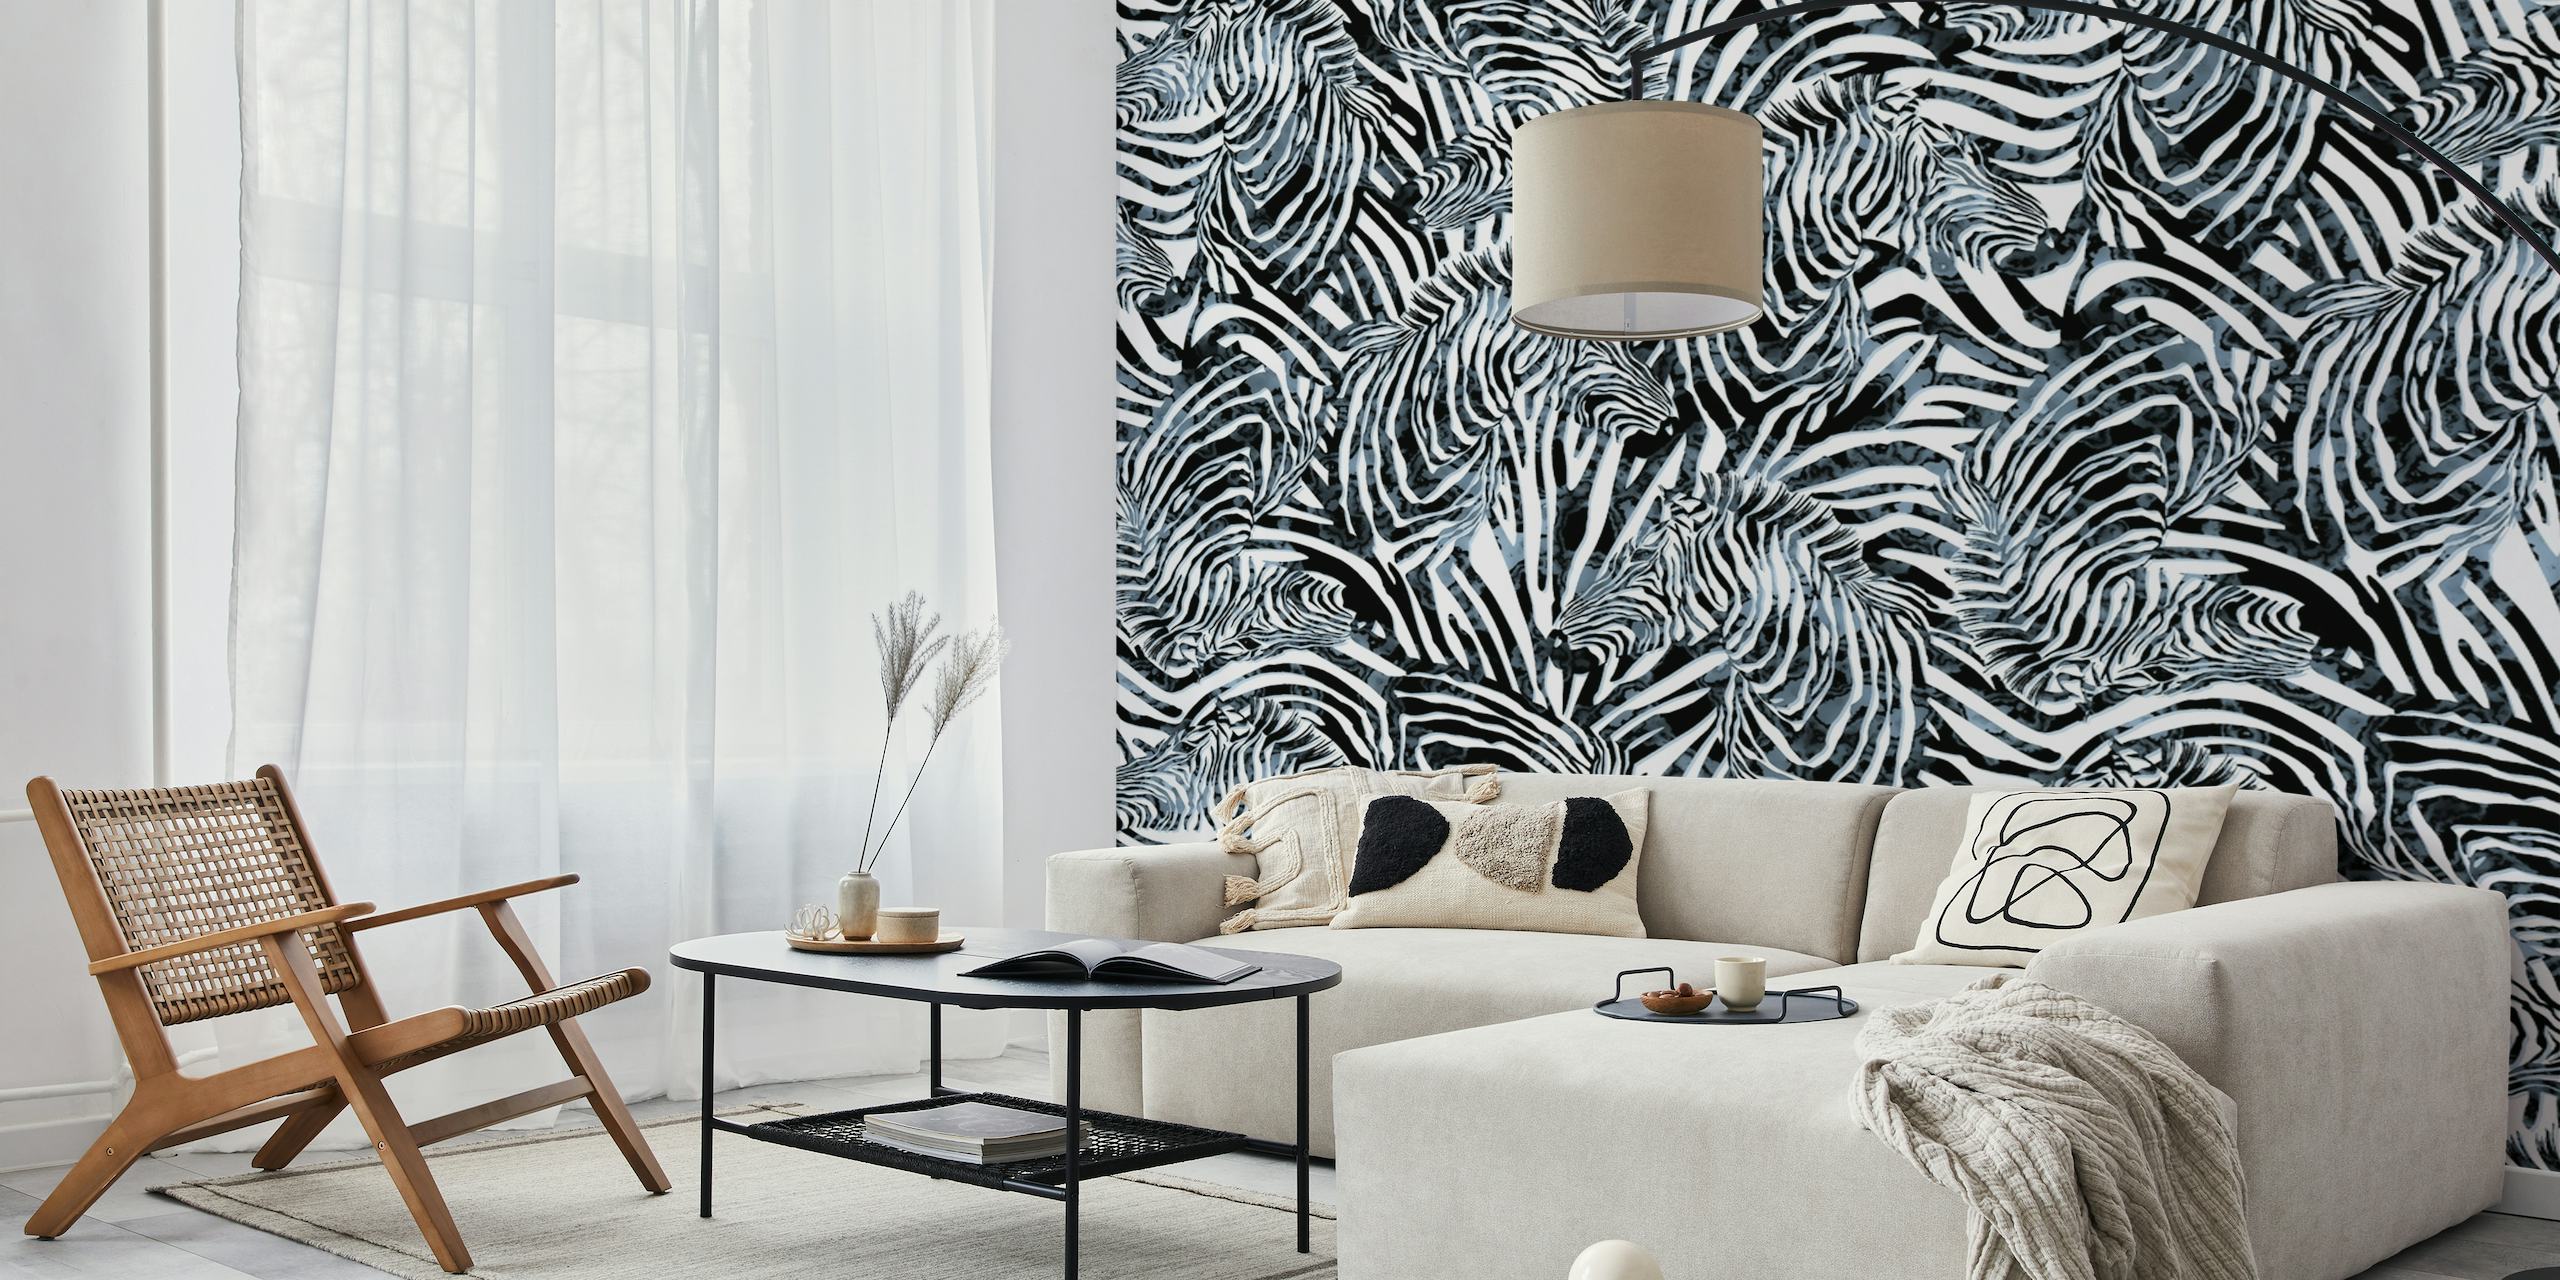 Zebra BW wallpaper